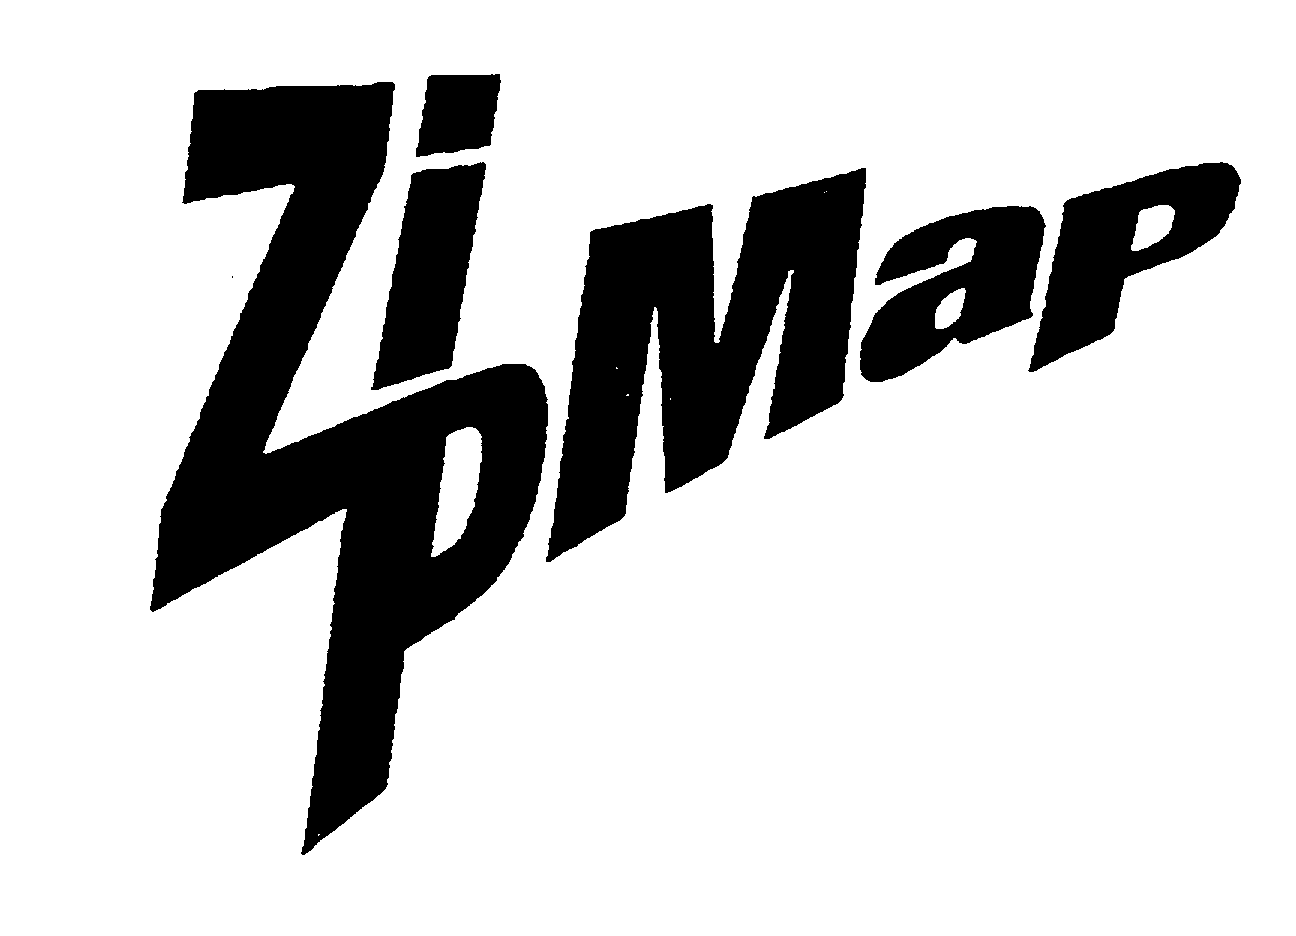 ZIPMAP